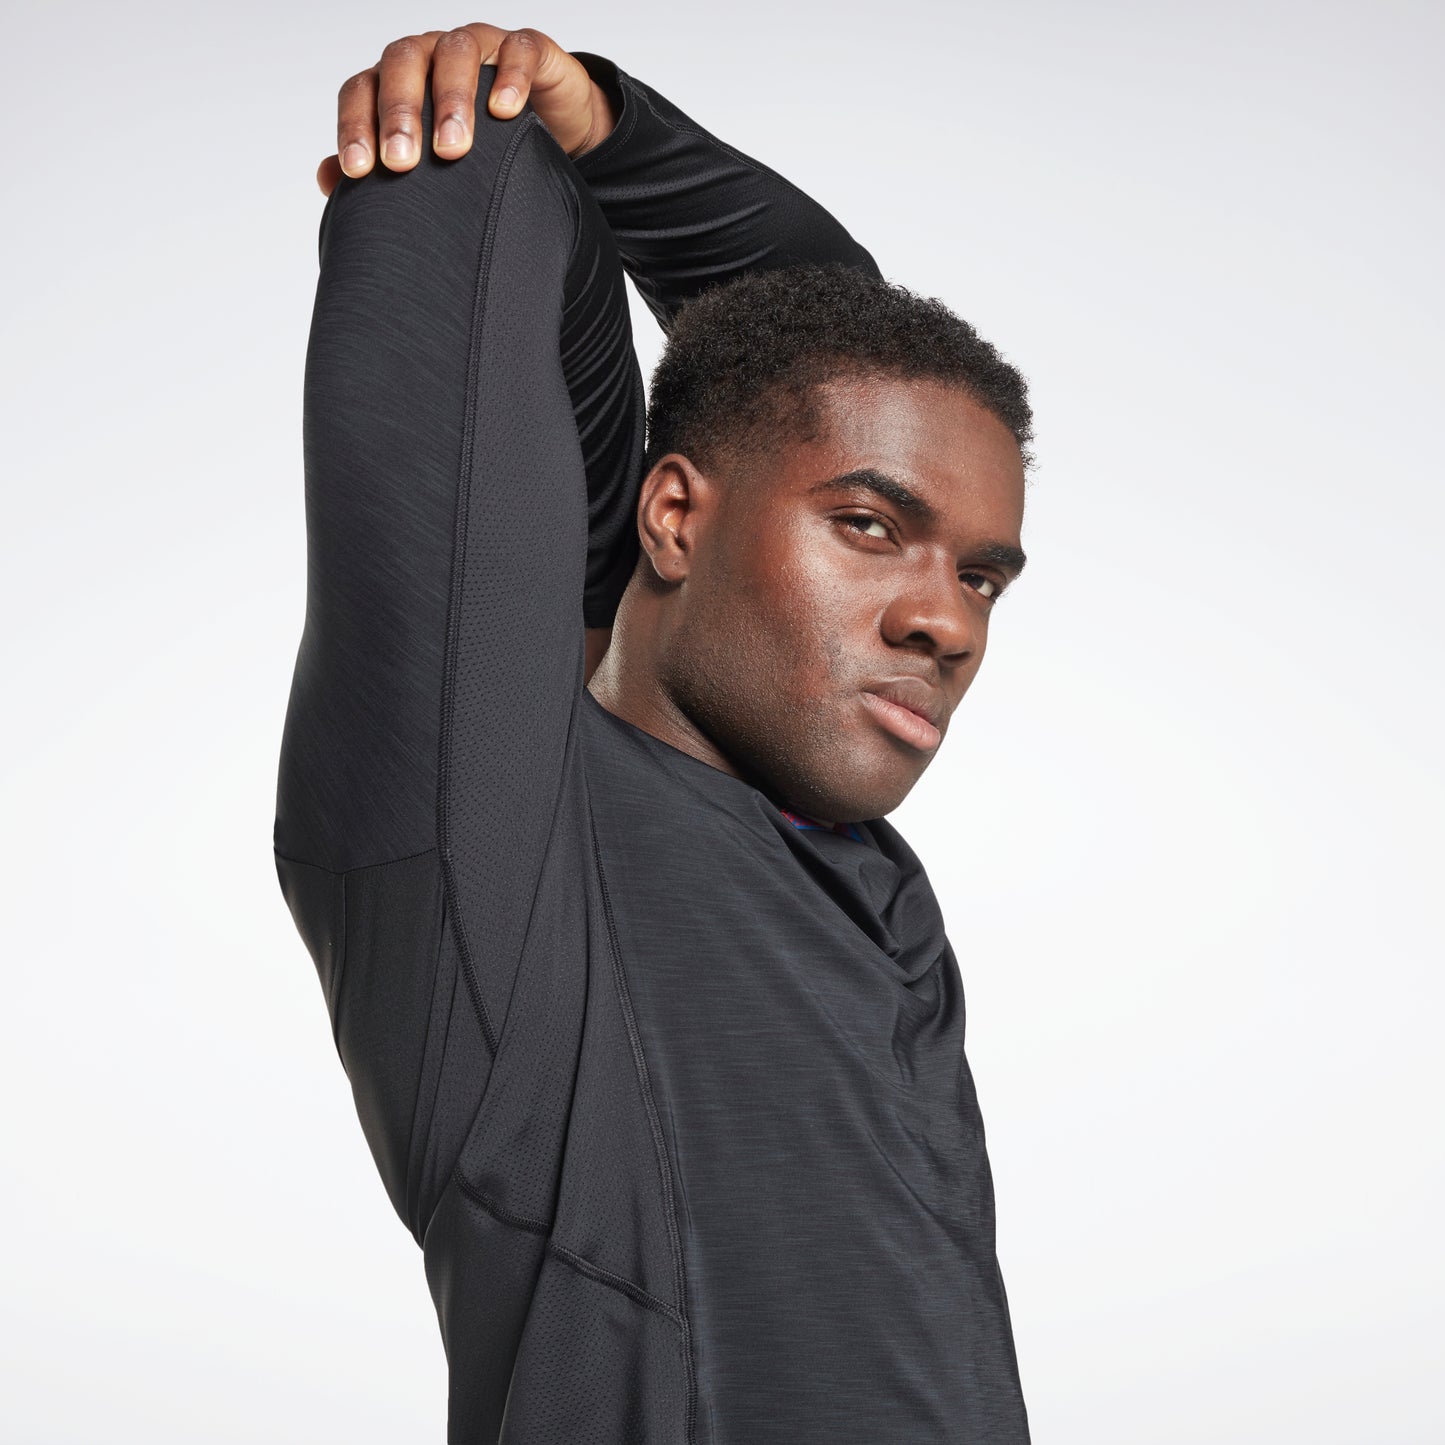 Reebok Apparel Men Activchill Long-Sleeve Top Athlete T-Long-Sleeve Top Black